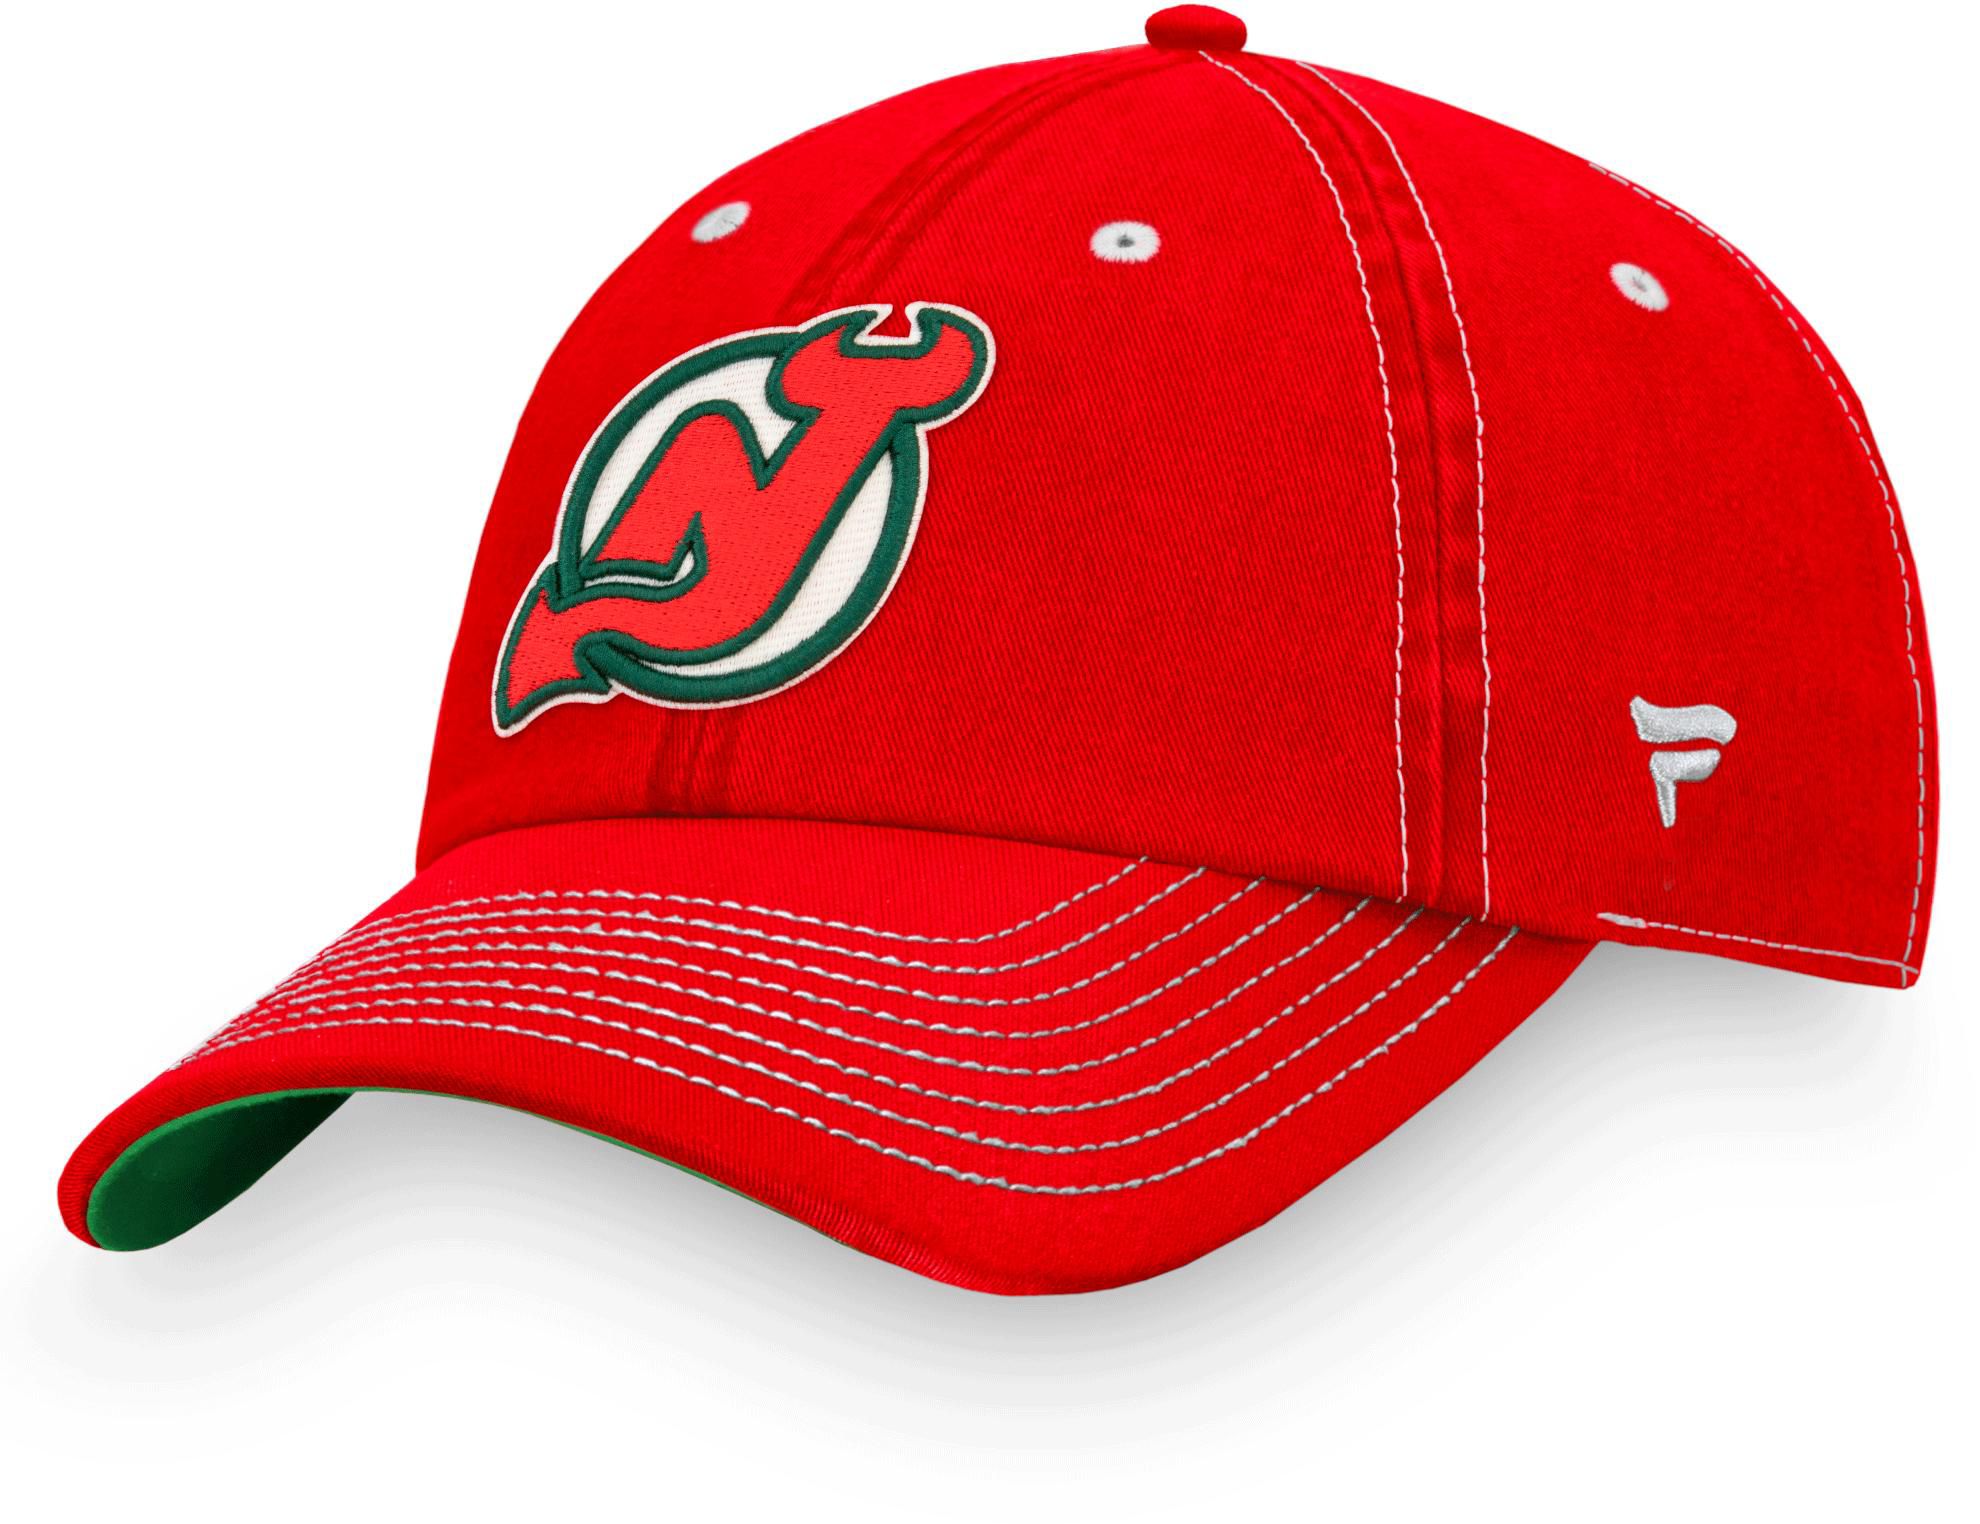 Fanatics Brand / NHL New Jersey Devils Block Party Adjustable Hat